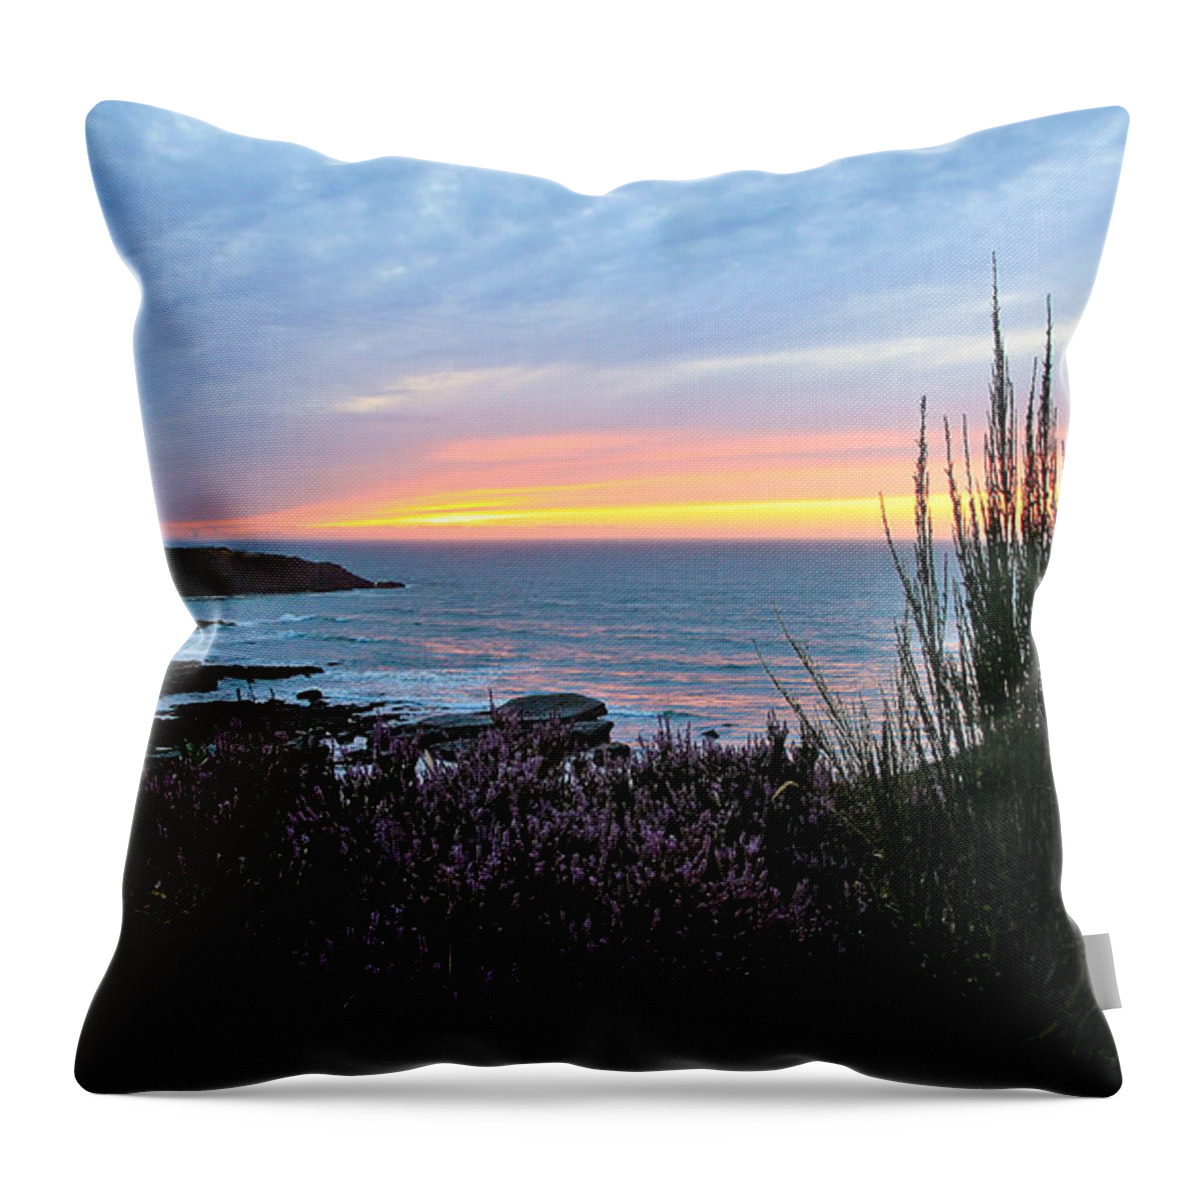 Sunset Throw Pillow featuring the photograph Sunset Garden View by Athena Mckinzie